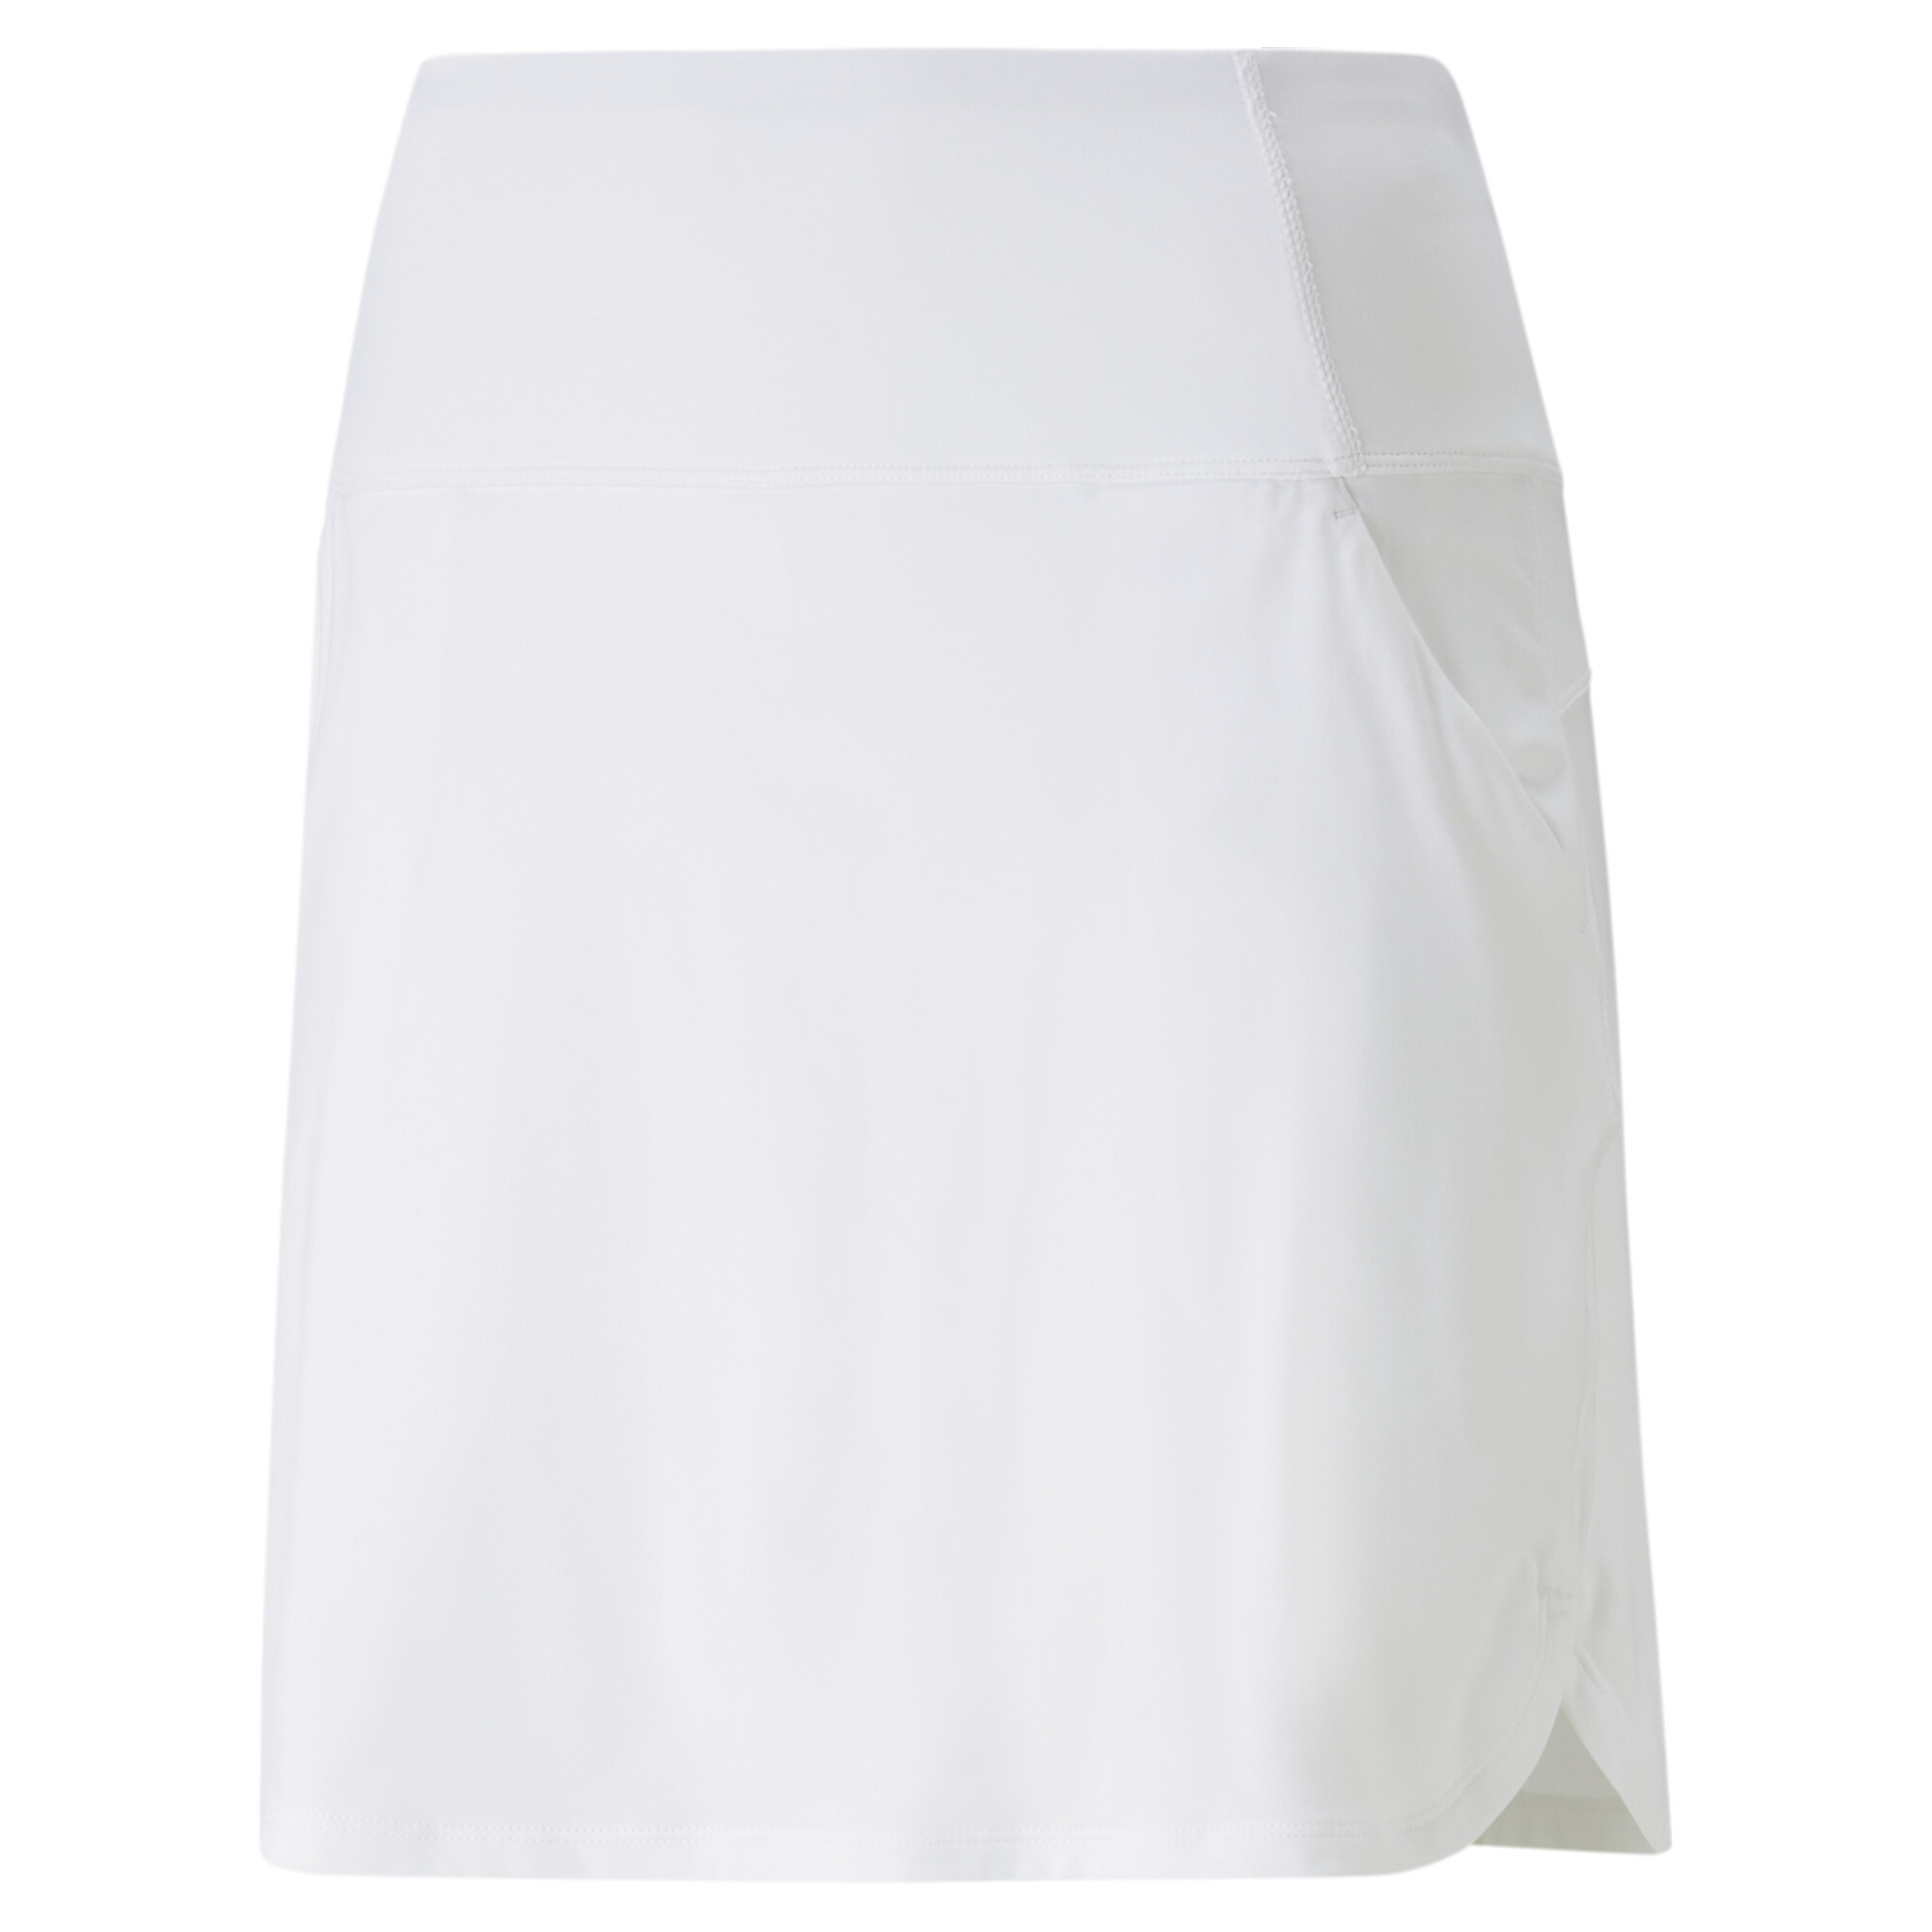 Women's Puma PWRMESH Golf Skirt, White, Size XS, Clothing